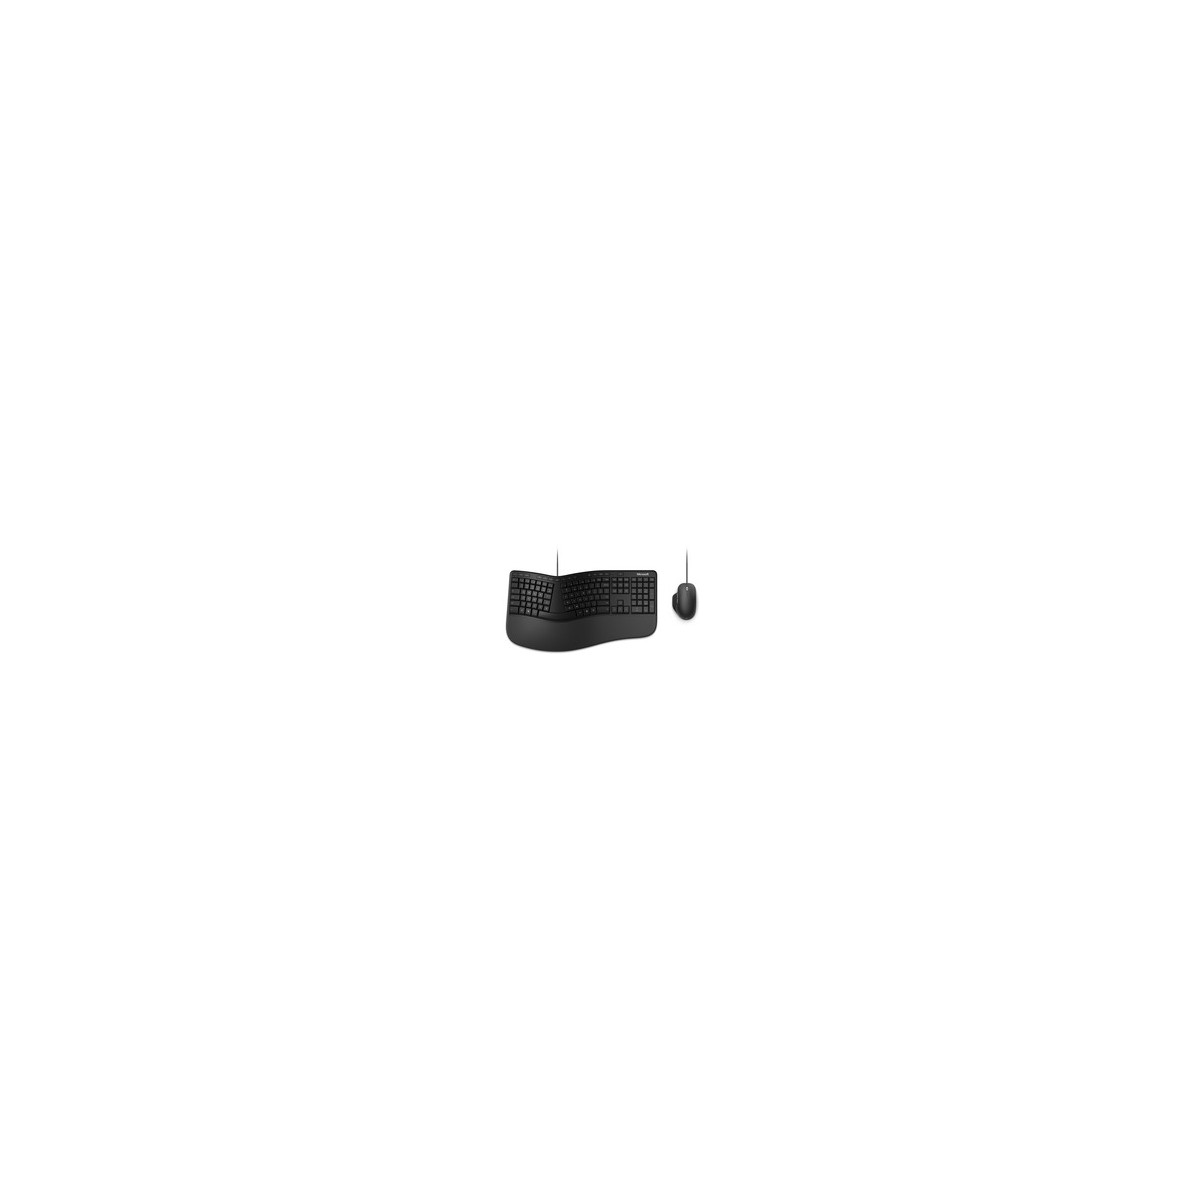 Microsoft Ergonomic Desktop - USB - QWERTZ - Black - Mouse included